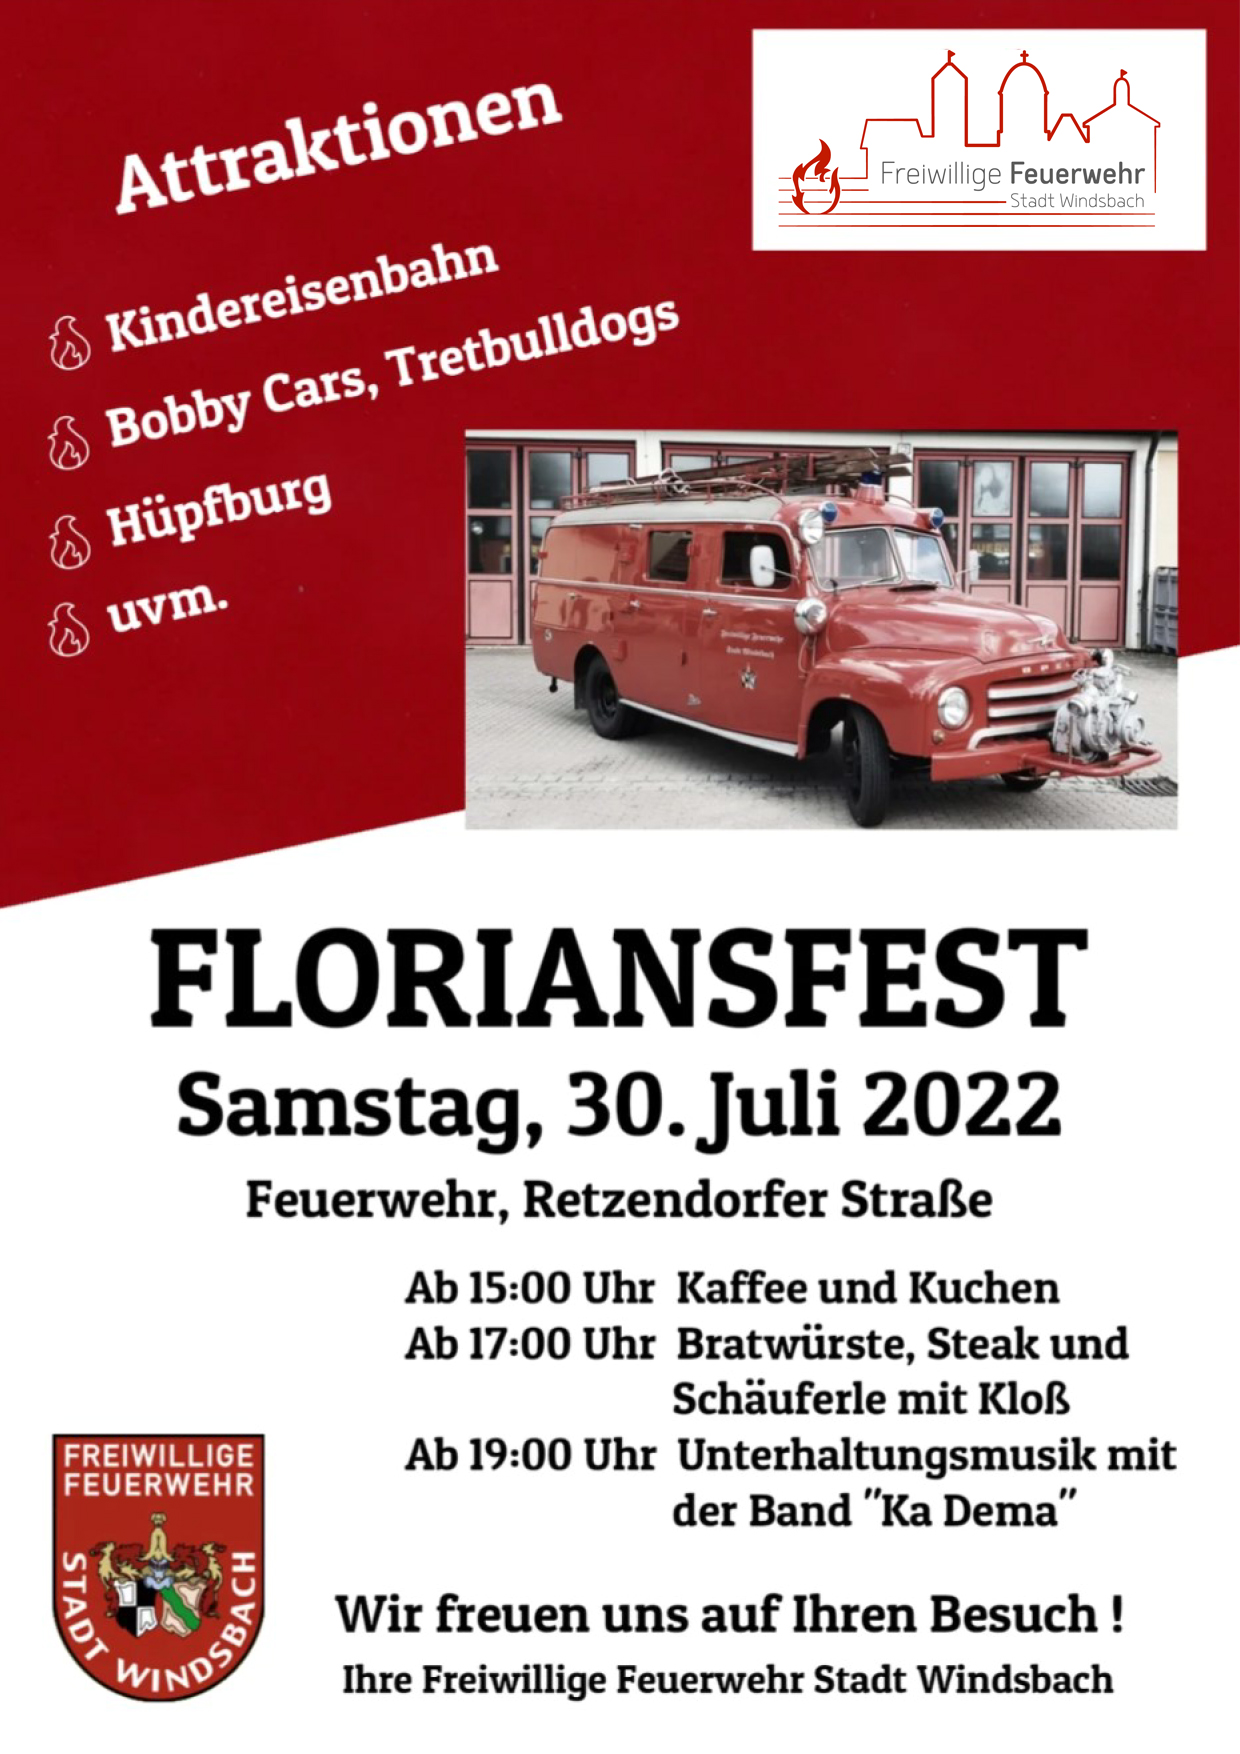  Floriansfest_Flyer 